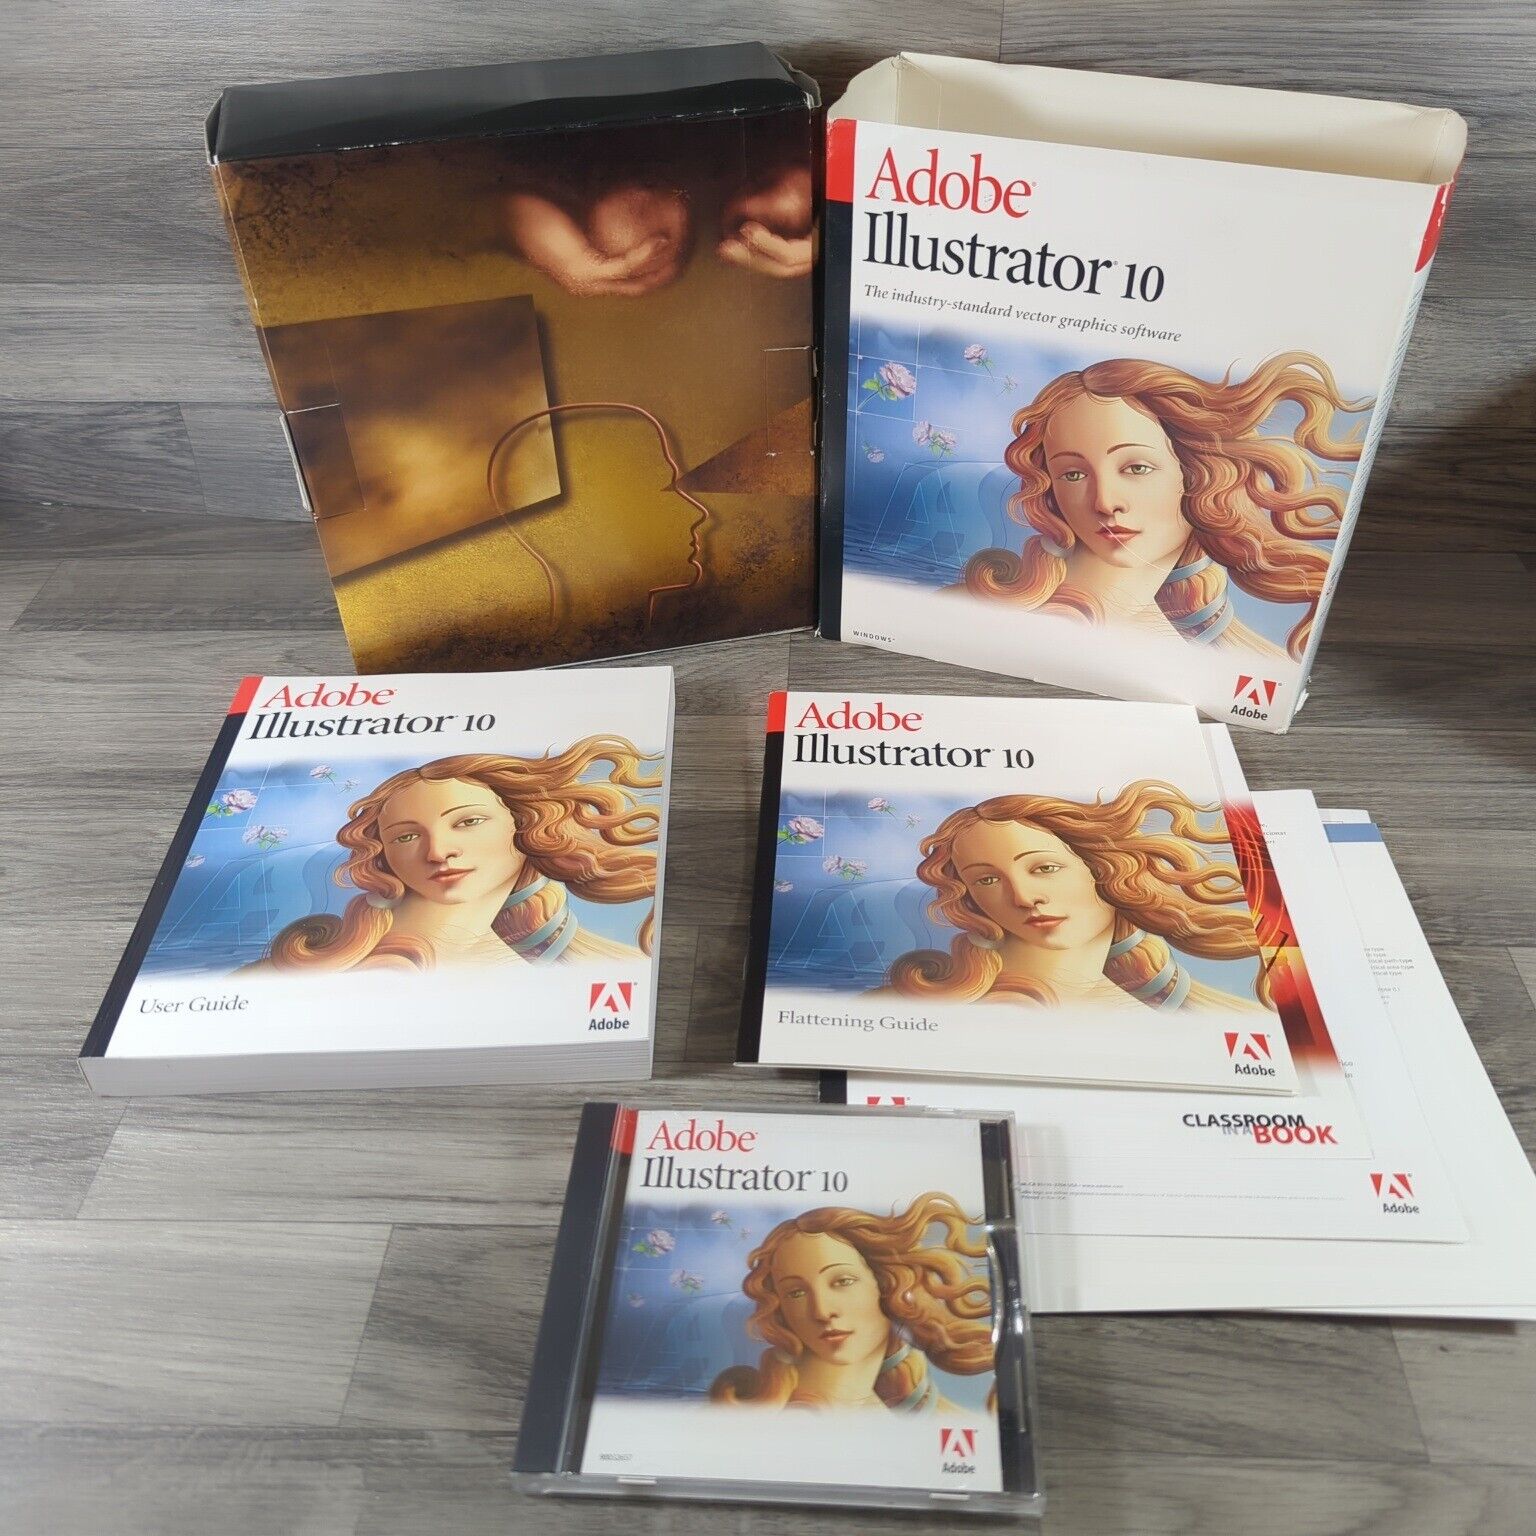 Adobe Illustrator 10 PC Windows & Serial Number In Slip Cover Big Box W Manuals